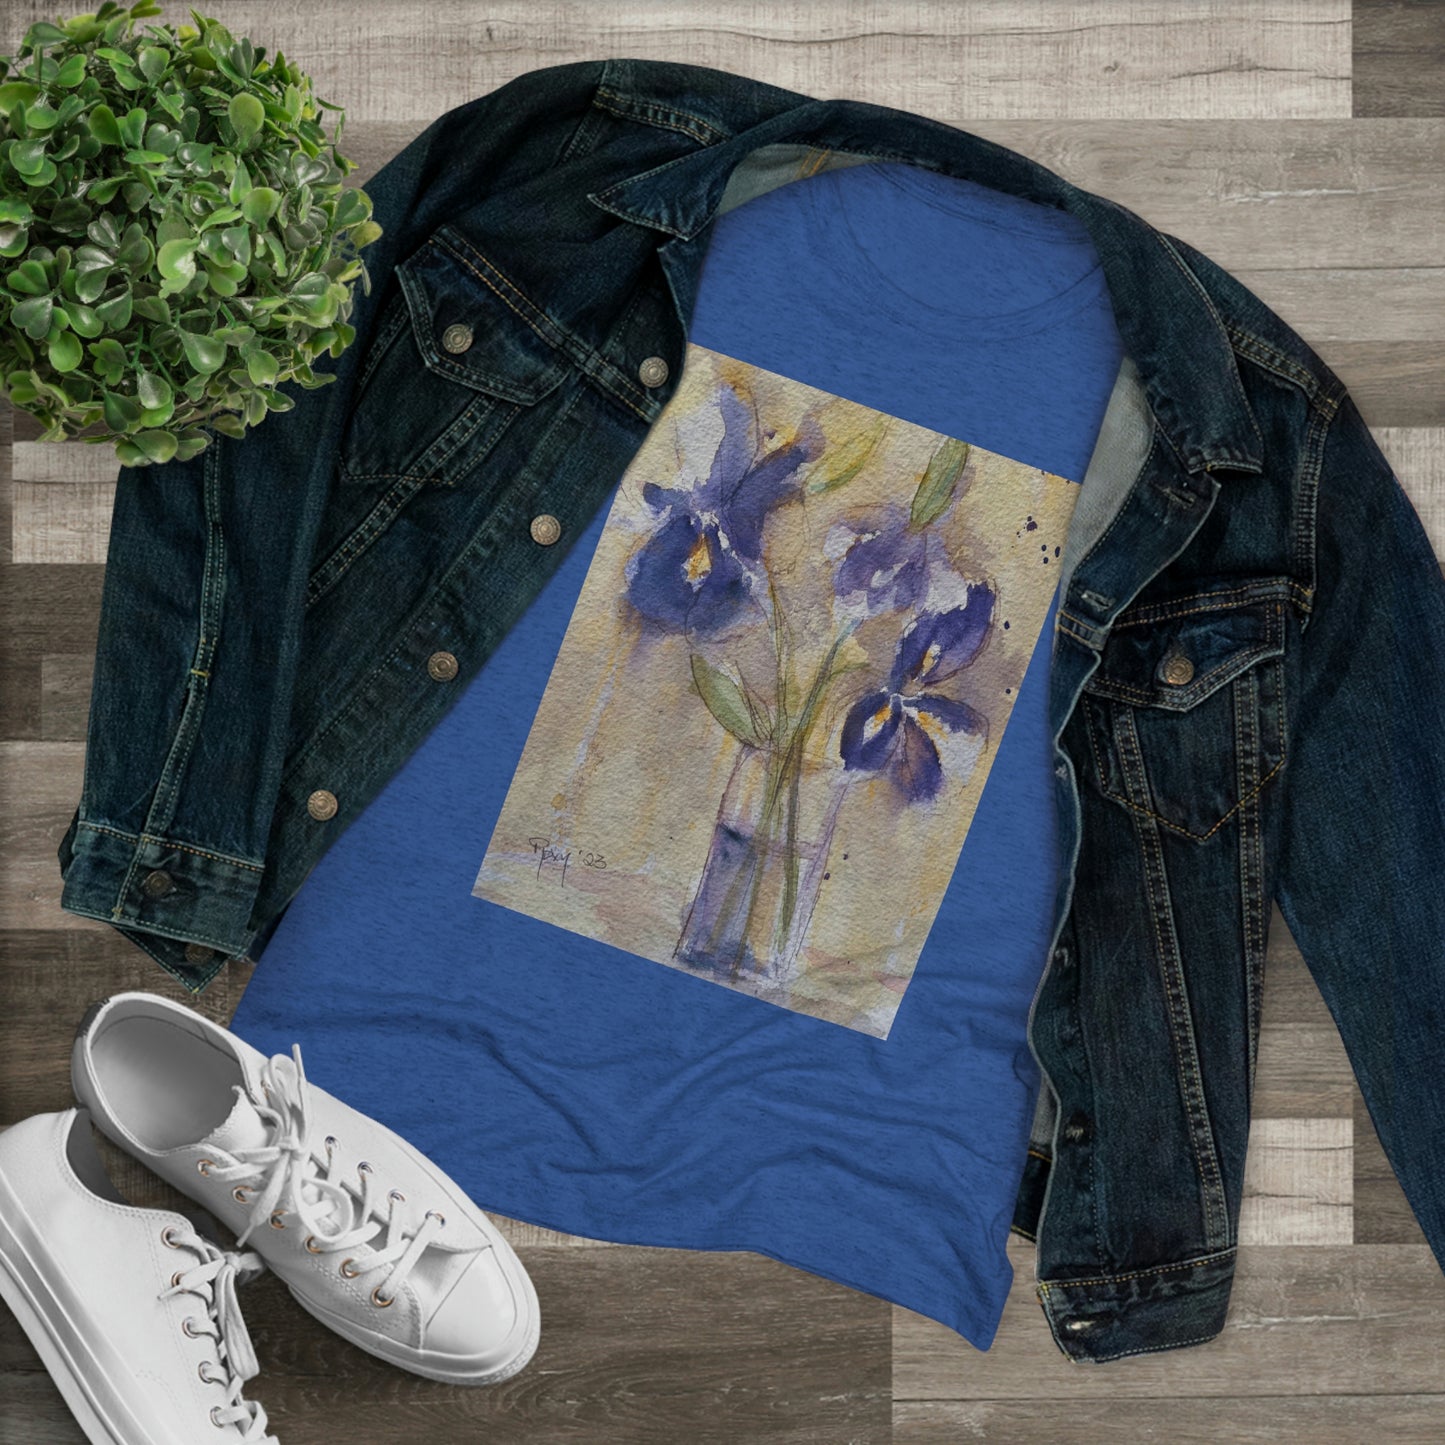 Purple Irises Women's fitted Triblend Tee  tee shirt